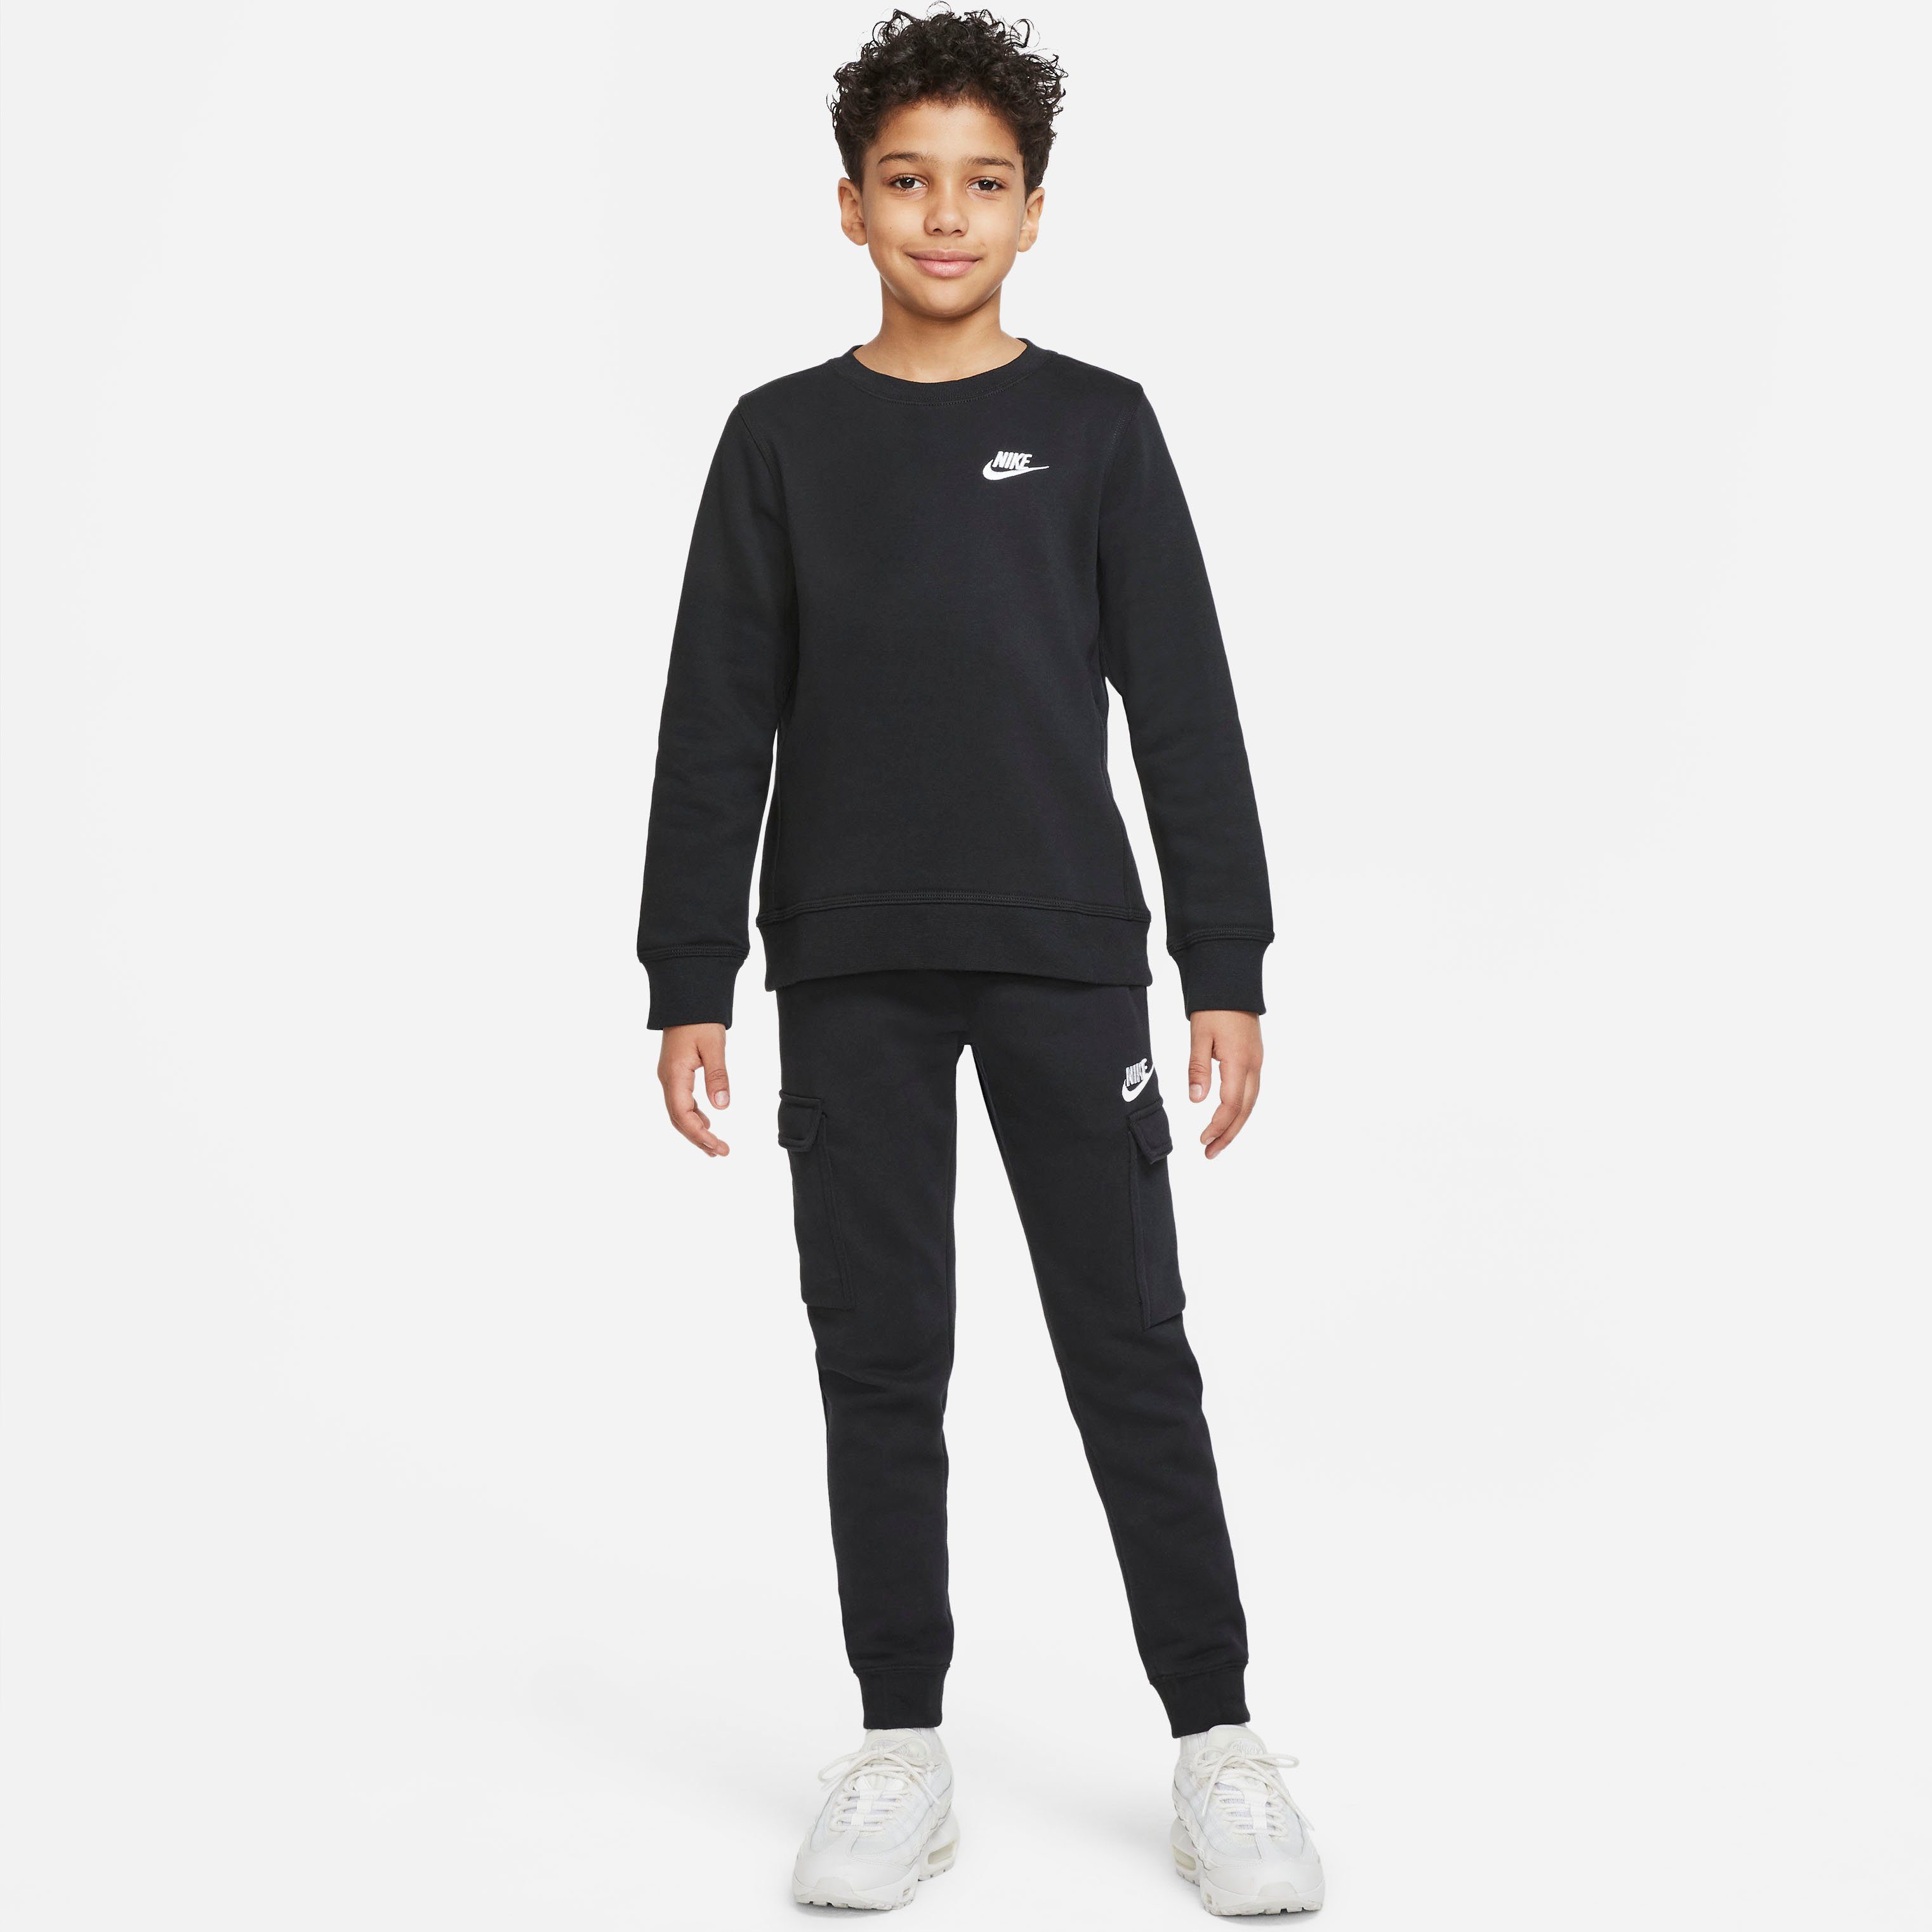 Kids Big Sweatshirt Sportswear BLACK/WHITE Club Nike Sweatshirt